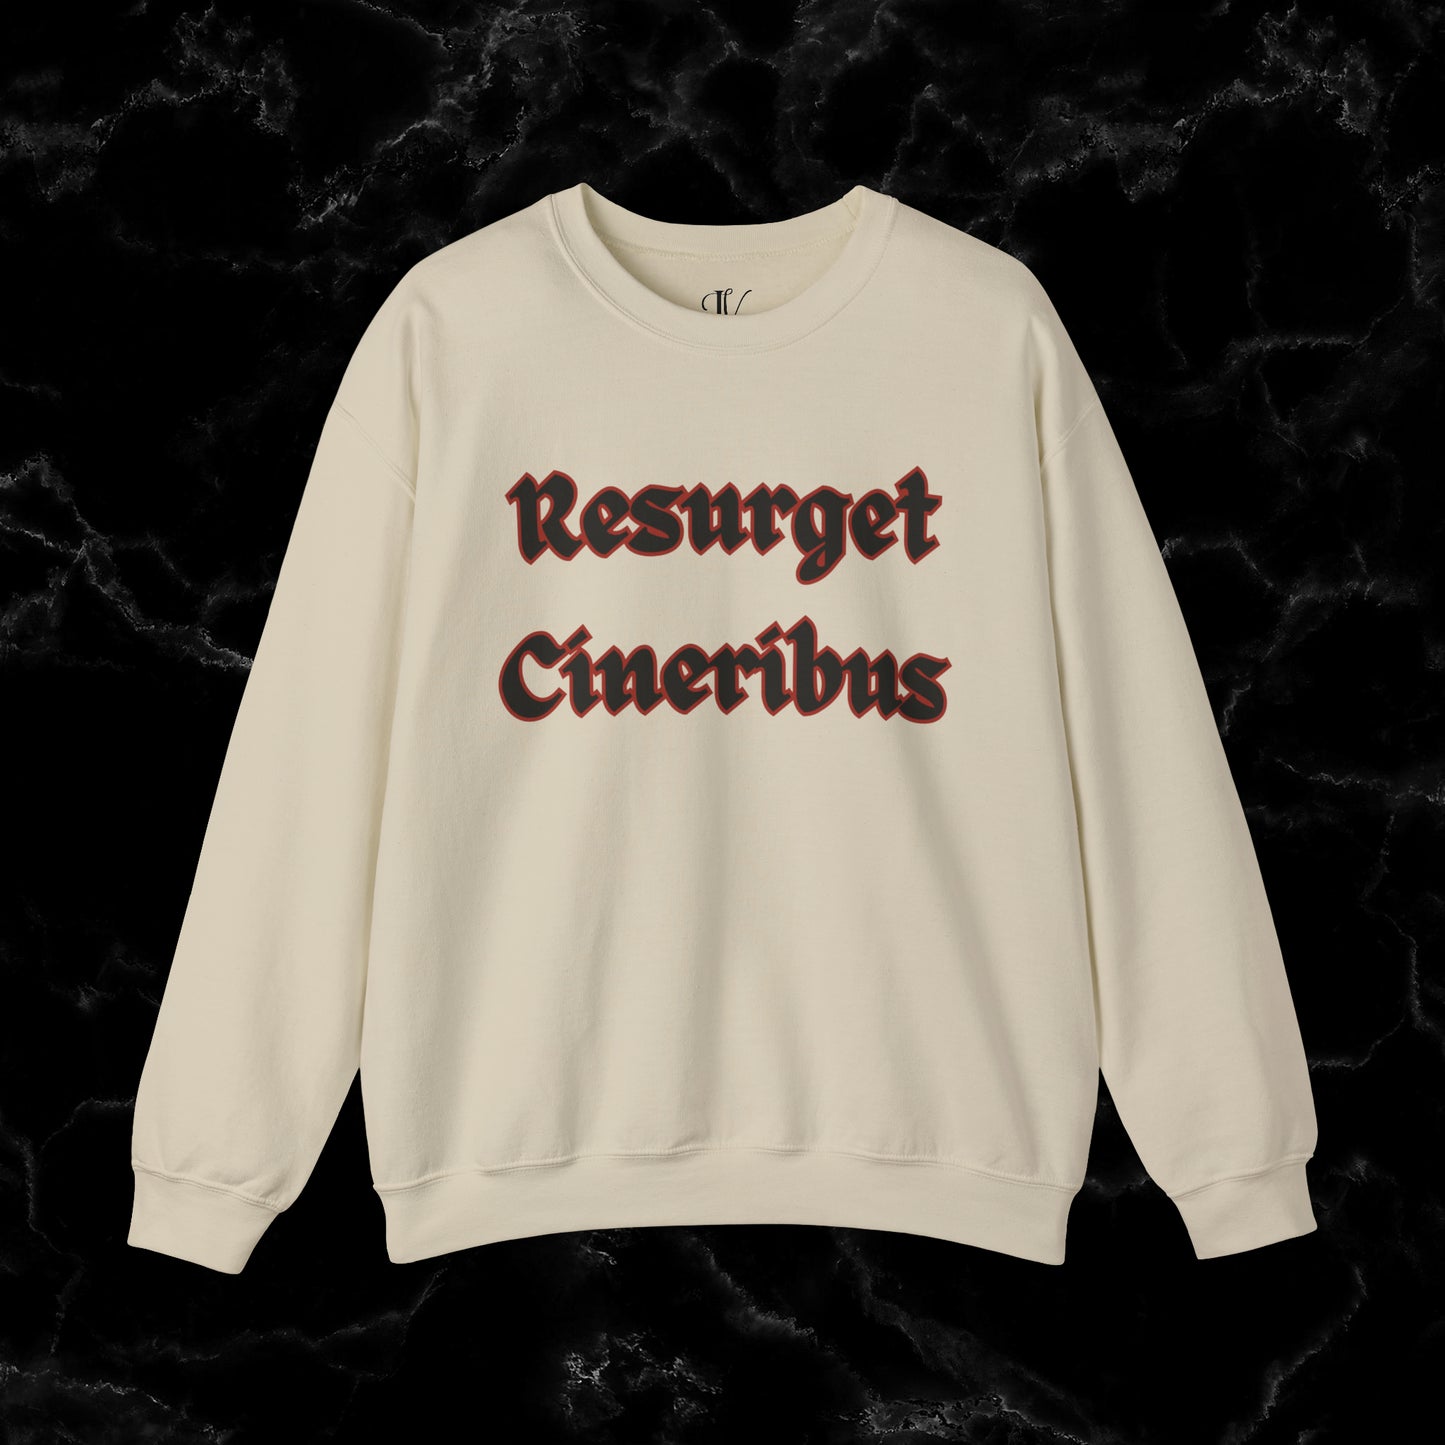 Resurget Cineribus Unisex Crewneck Sweatshirt - Latin Inspirational Gifts for Sports Football Fans Sweatshirt S Sand 